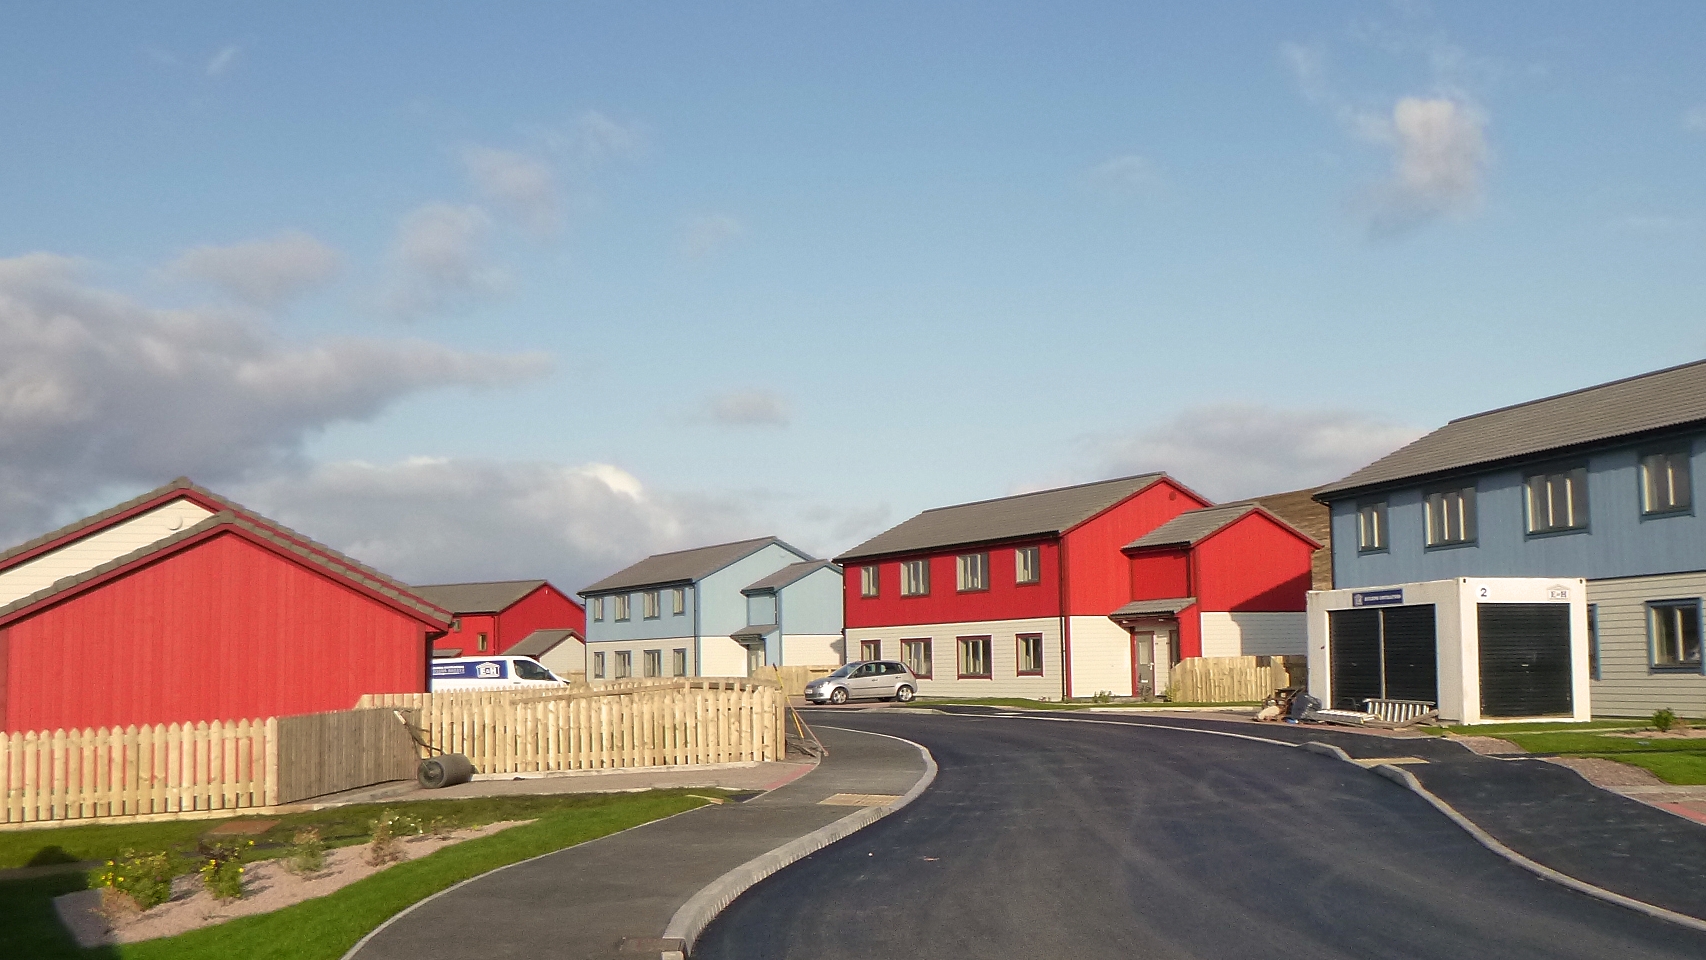 New affordable homes near completion at Hjaltland development